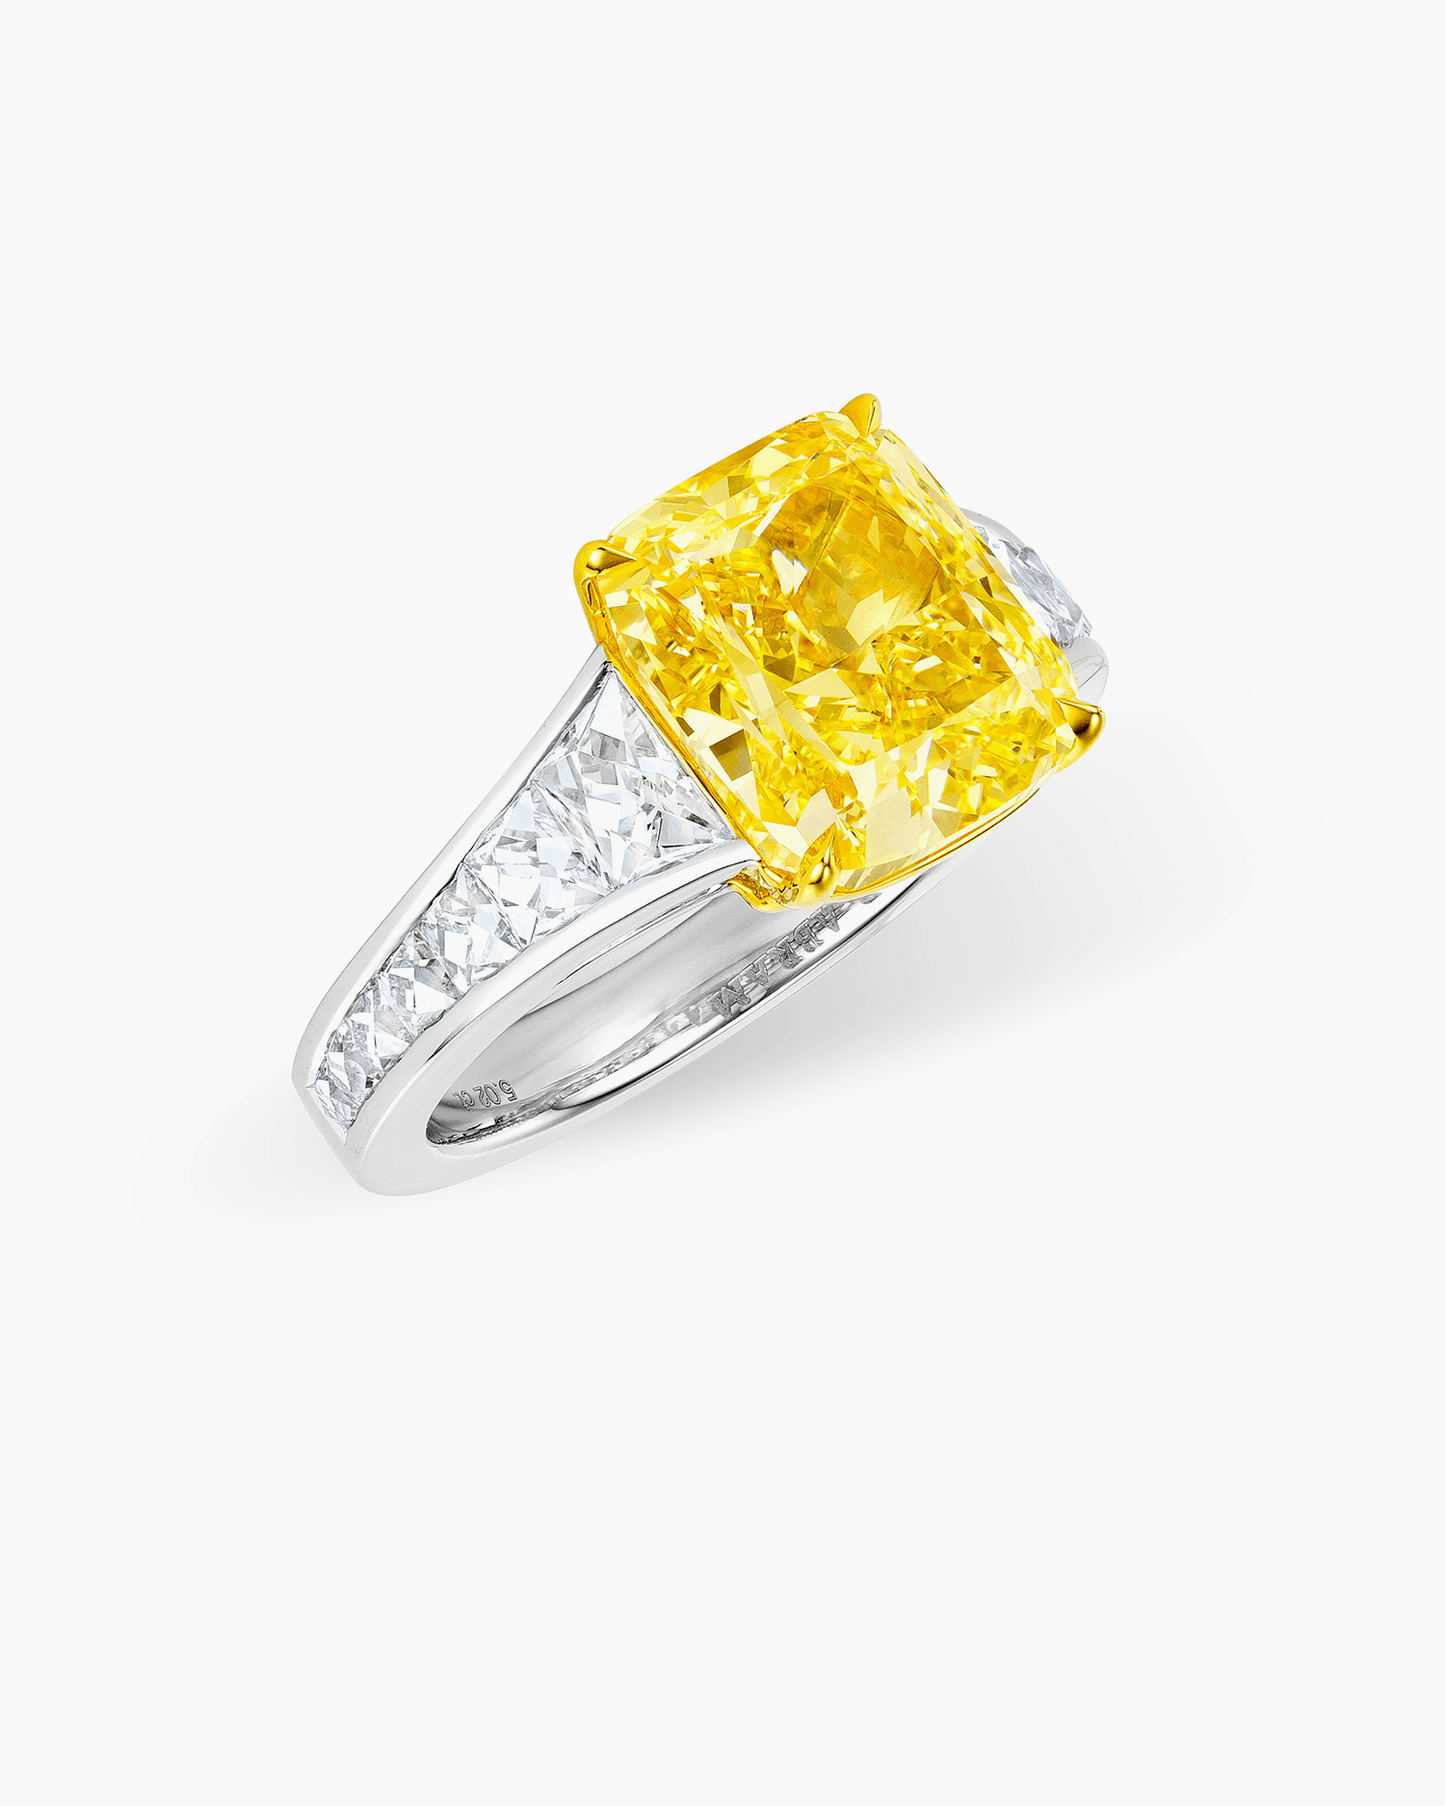 5.02 carat Cushion Cut Yellow and White Diamond Ring